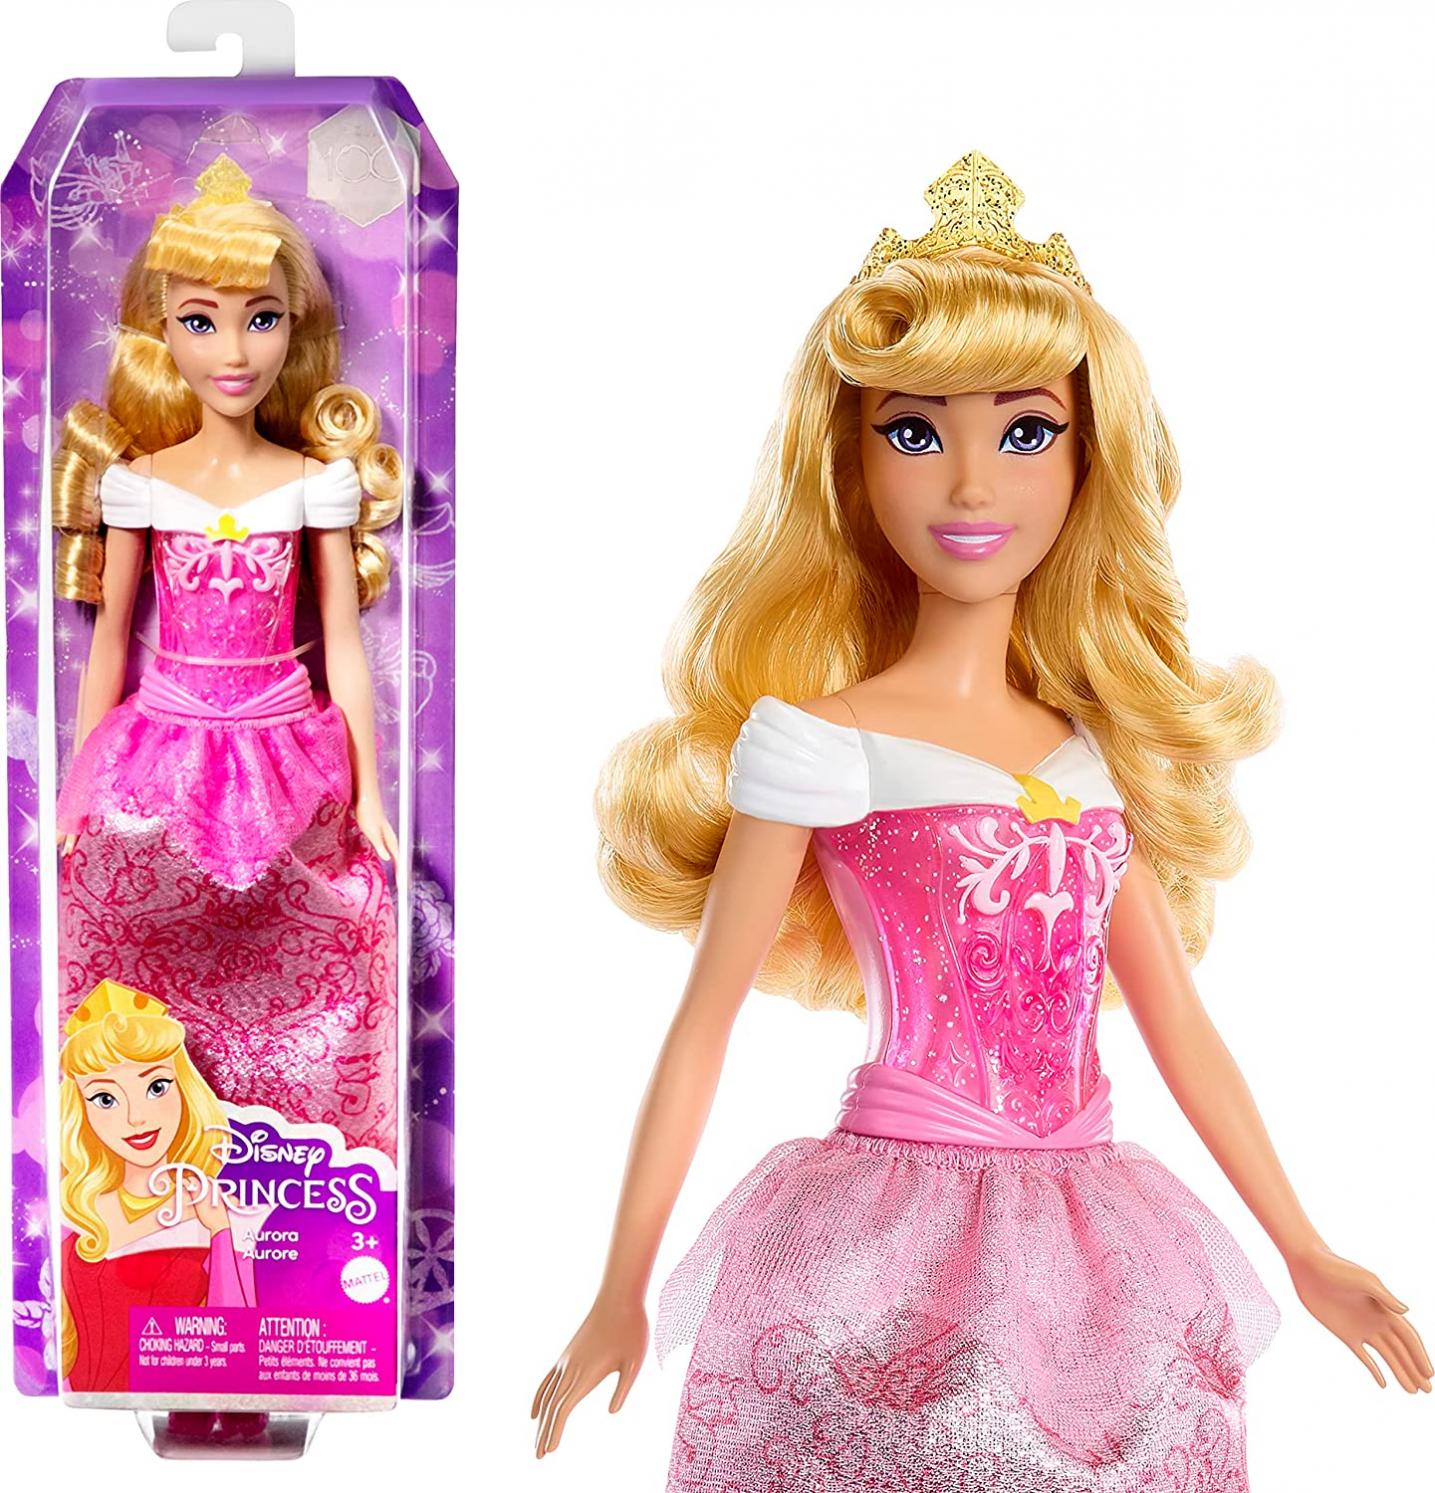 Disney Princess Aurora Fashion Doll, New for 2023, Sparkling Look with Blonde Hair, Purple Eyes & Tiara Accessory